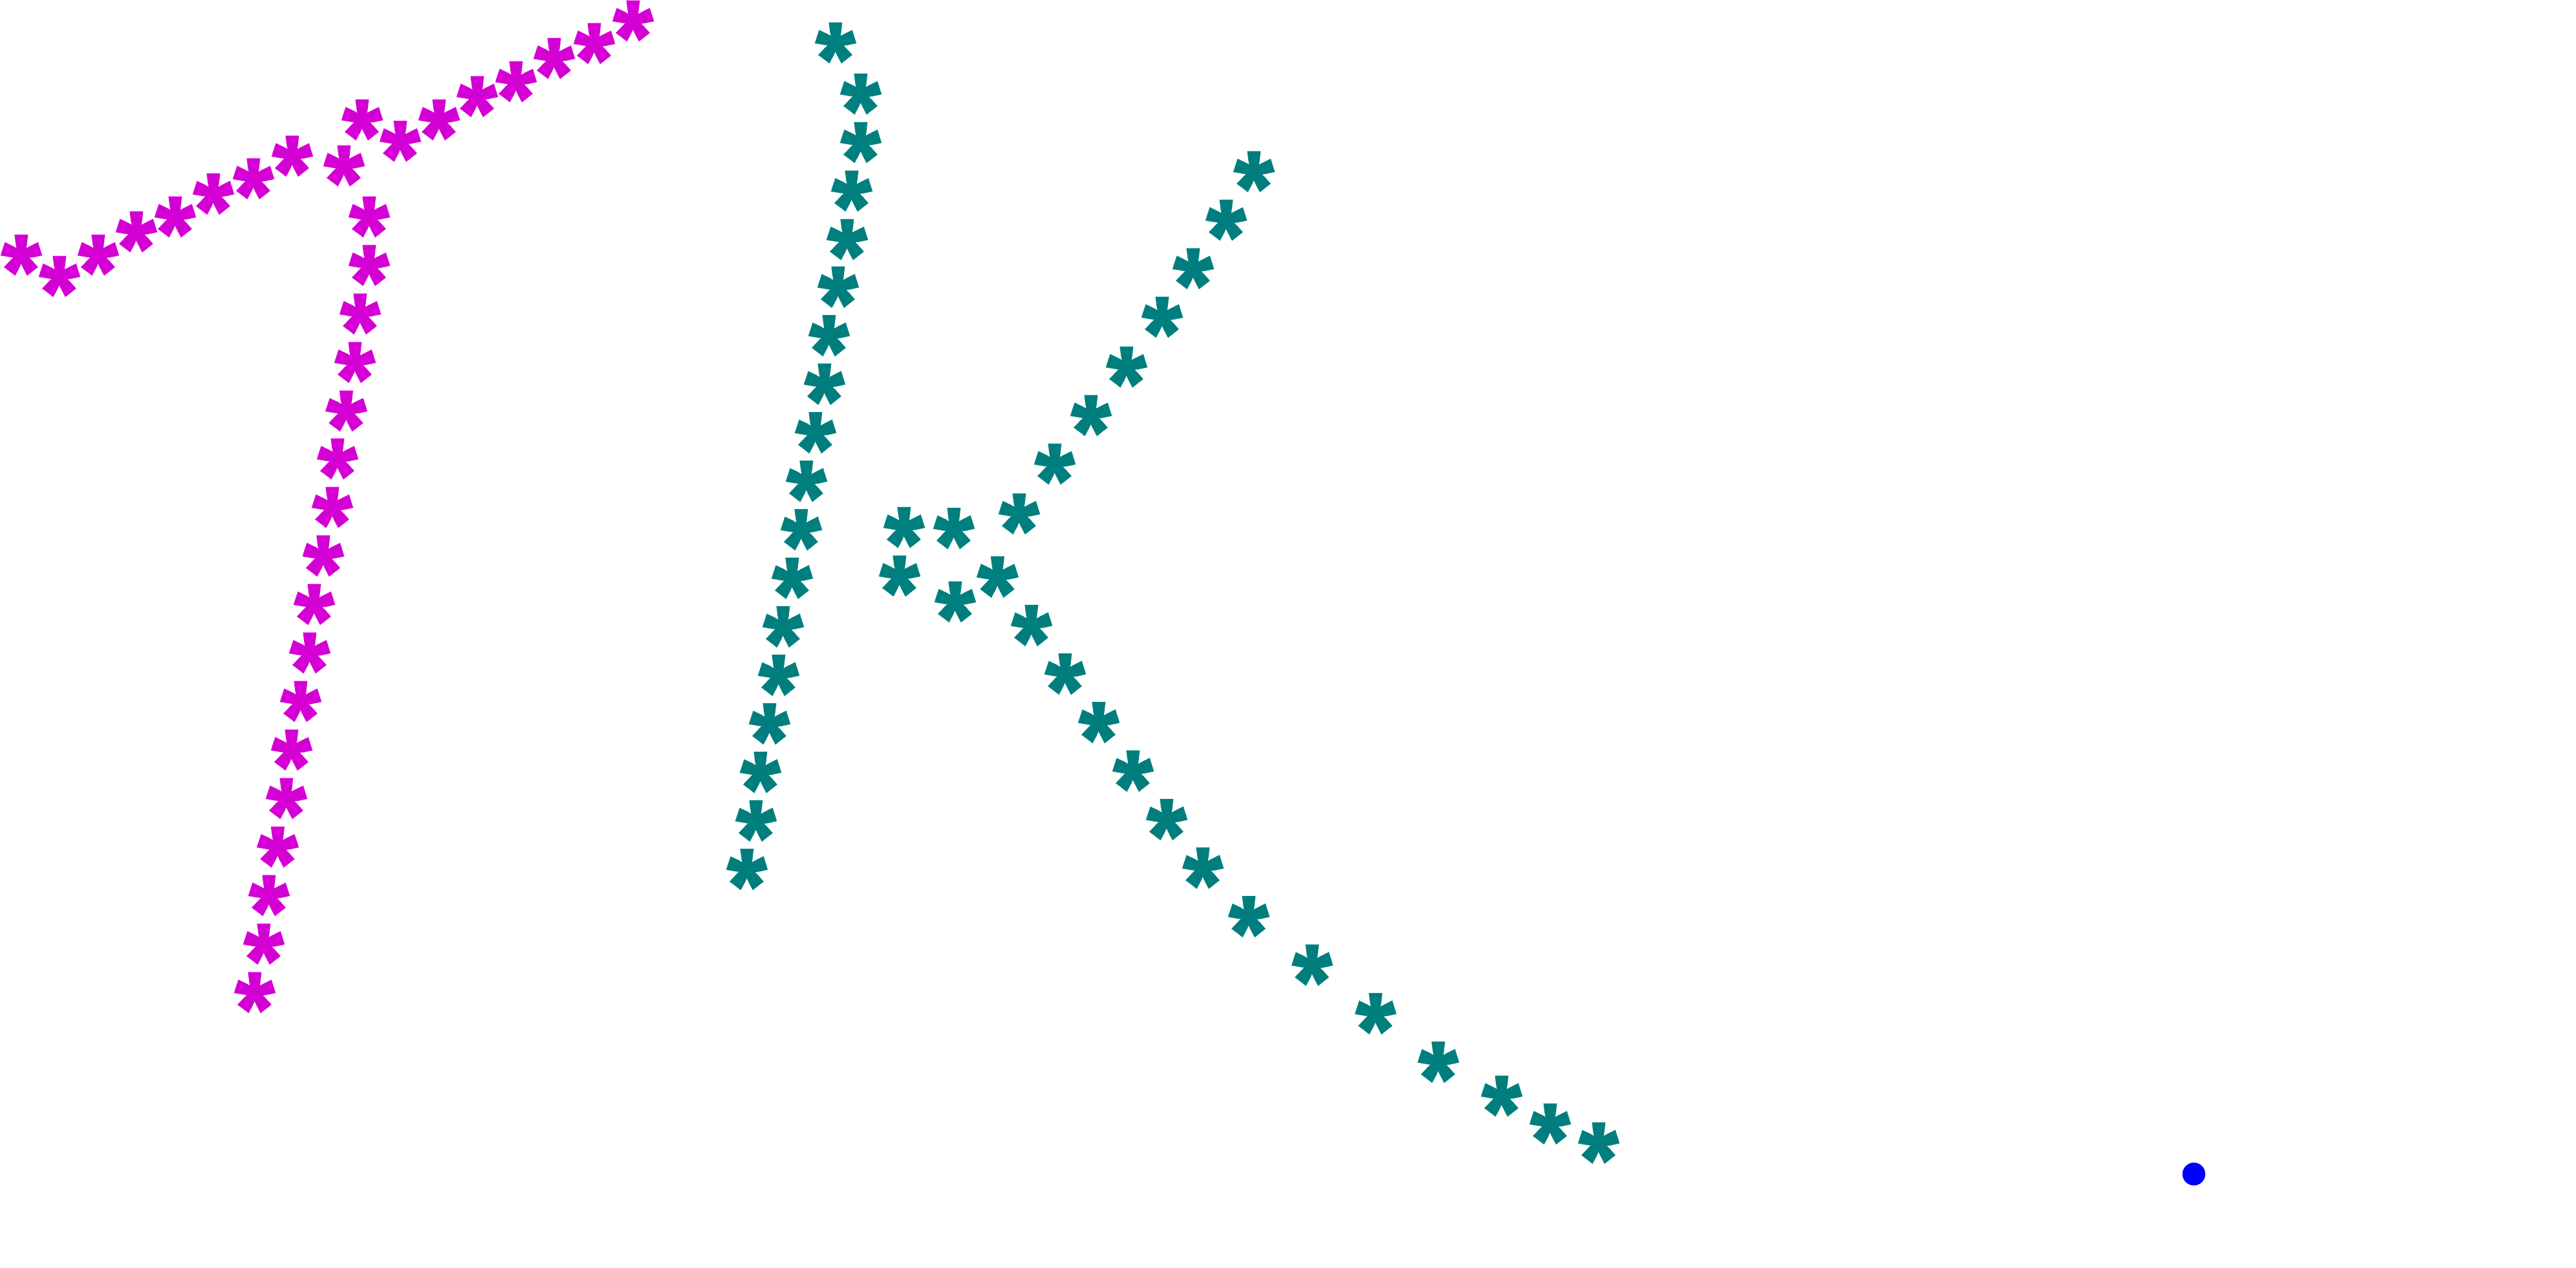 TechKenyans.org